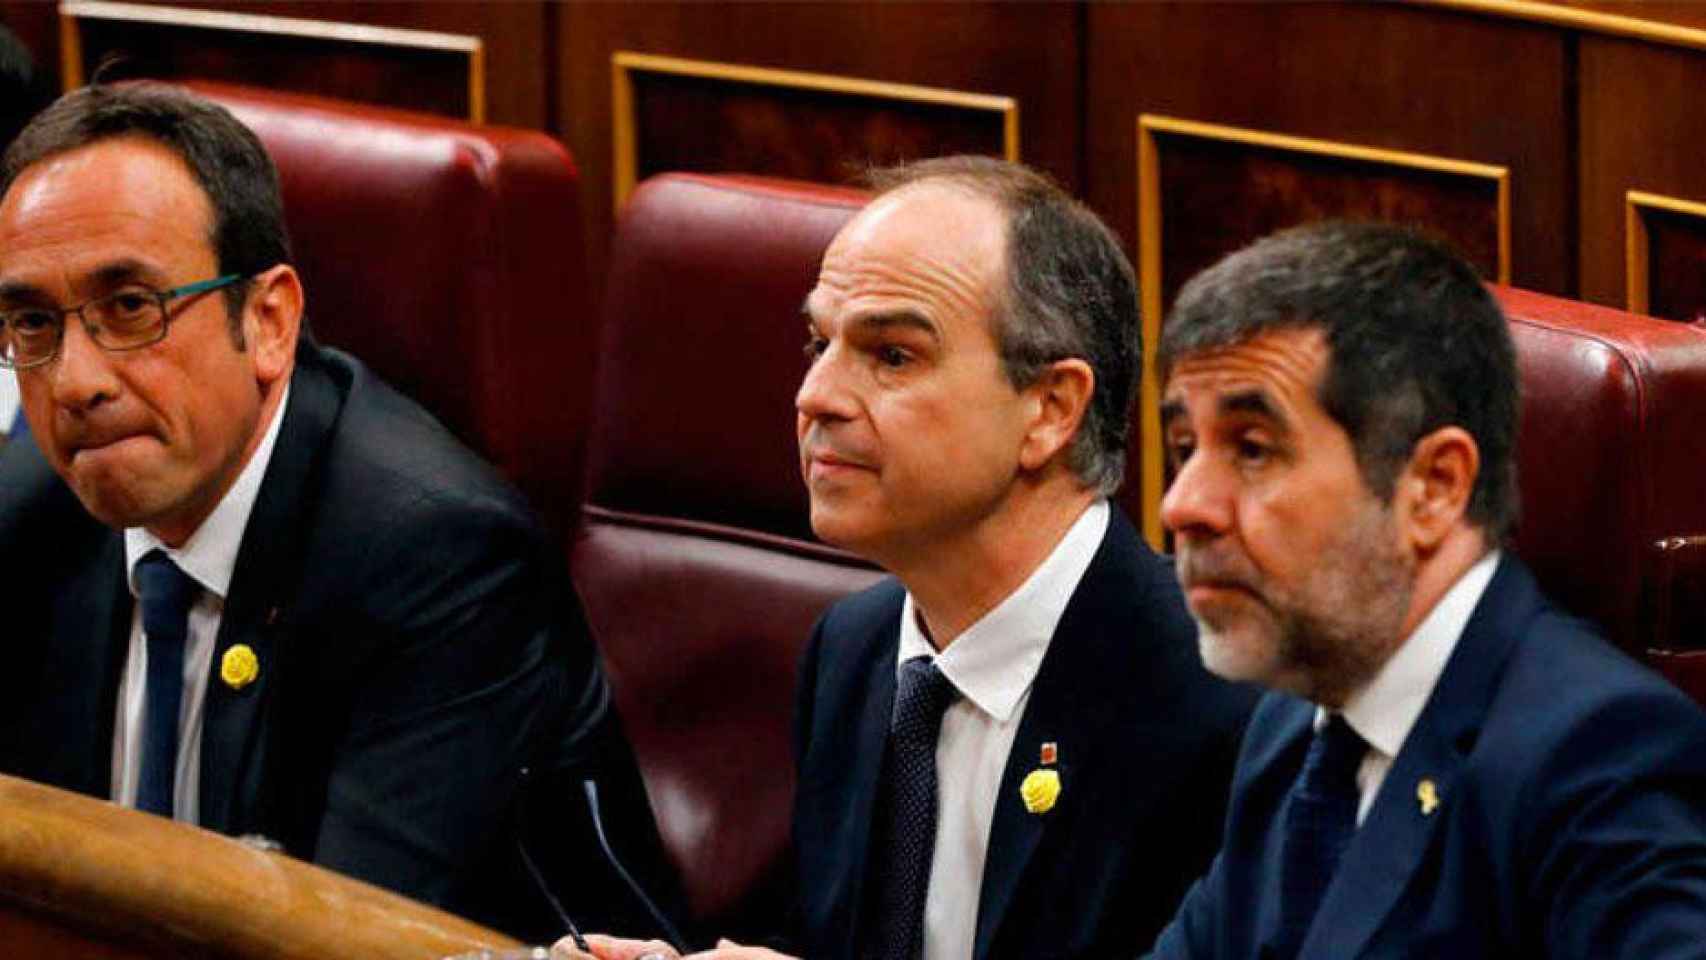 Josep Rull (i), Jordi Turull (c) y Jordi Sànchez (d) en el Congreso de los Diputados / EFE